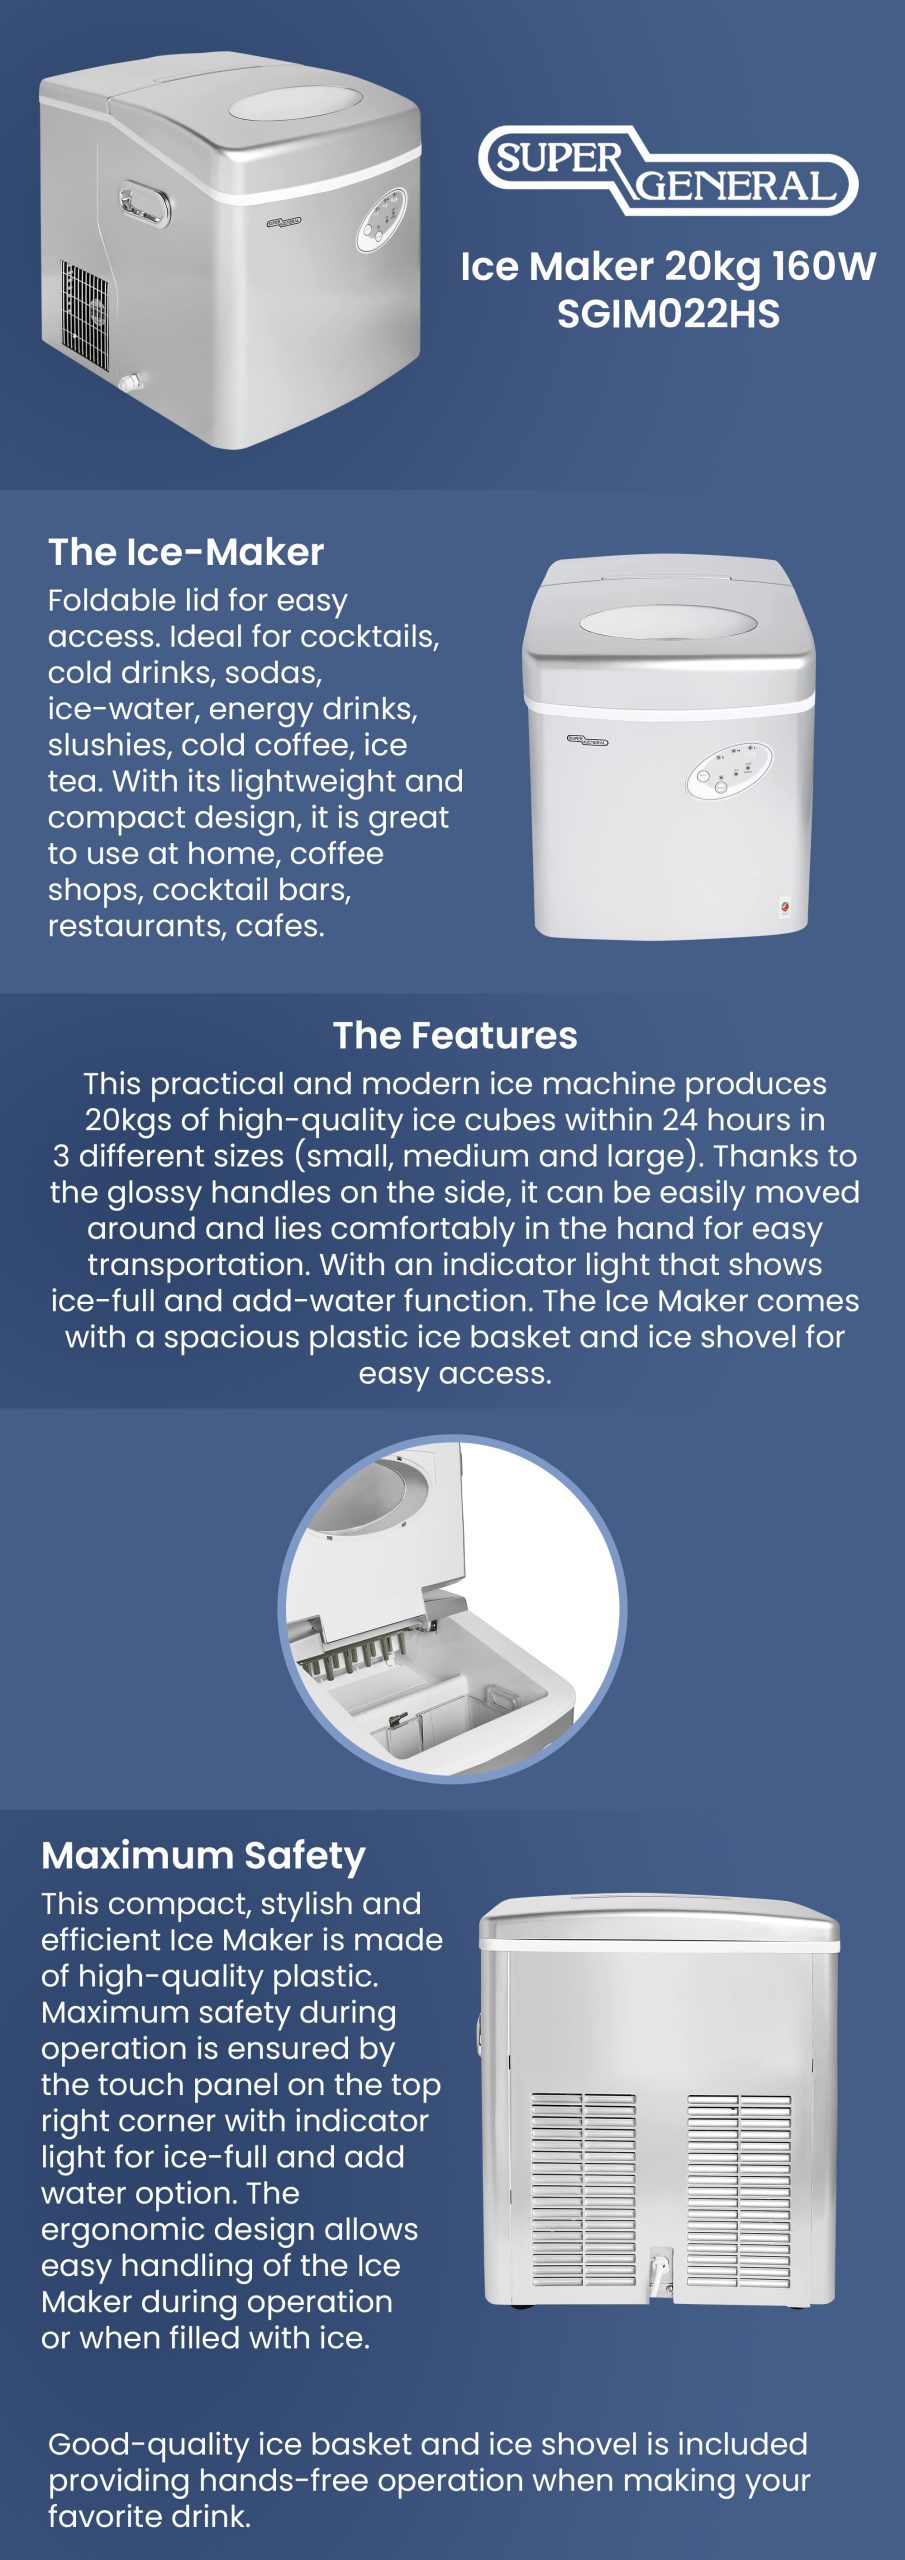 Super General Ice-Maker | ice maker portable
